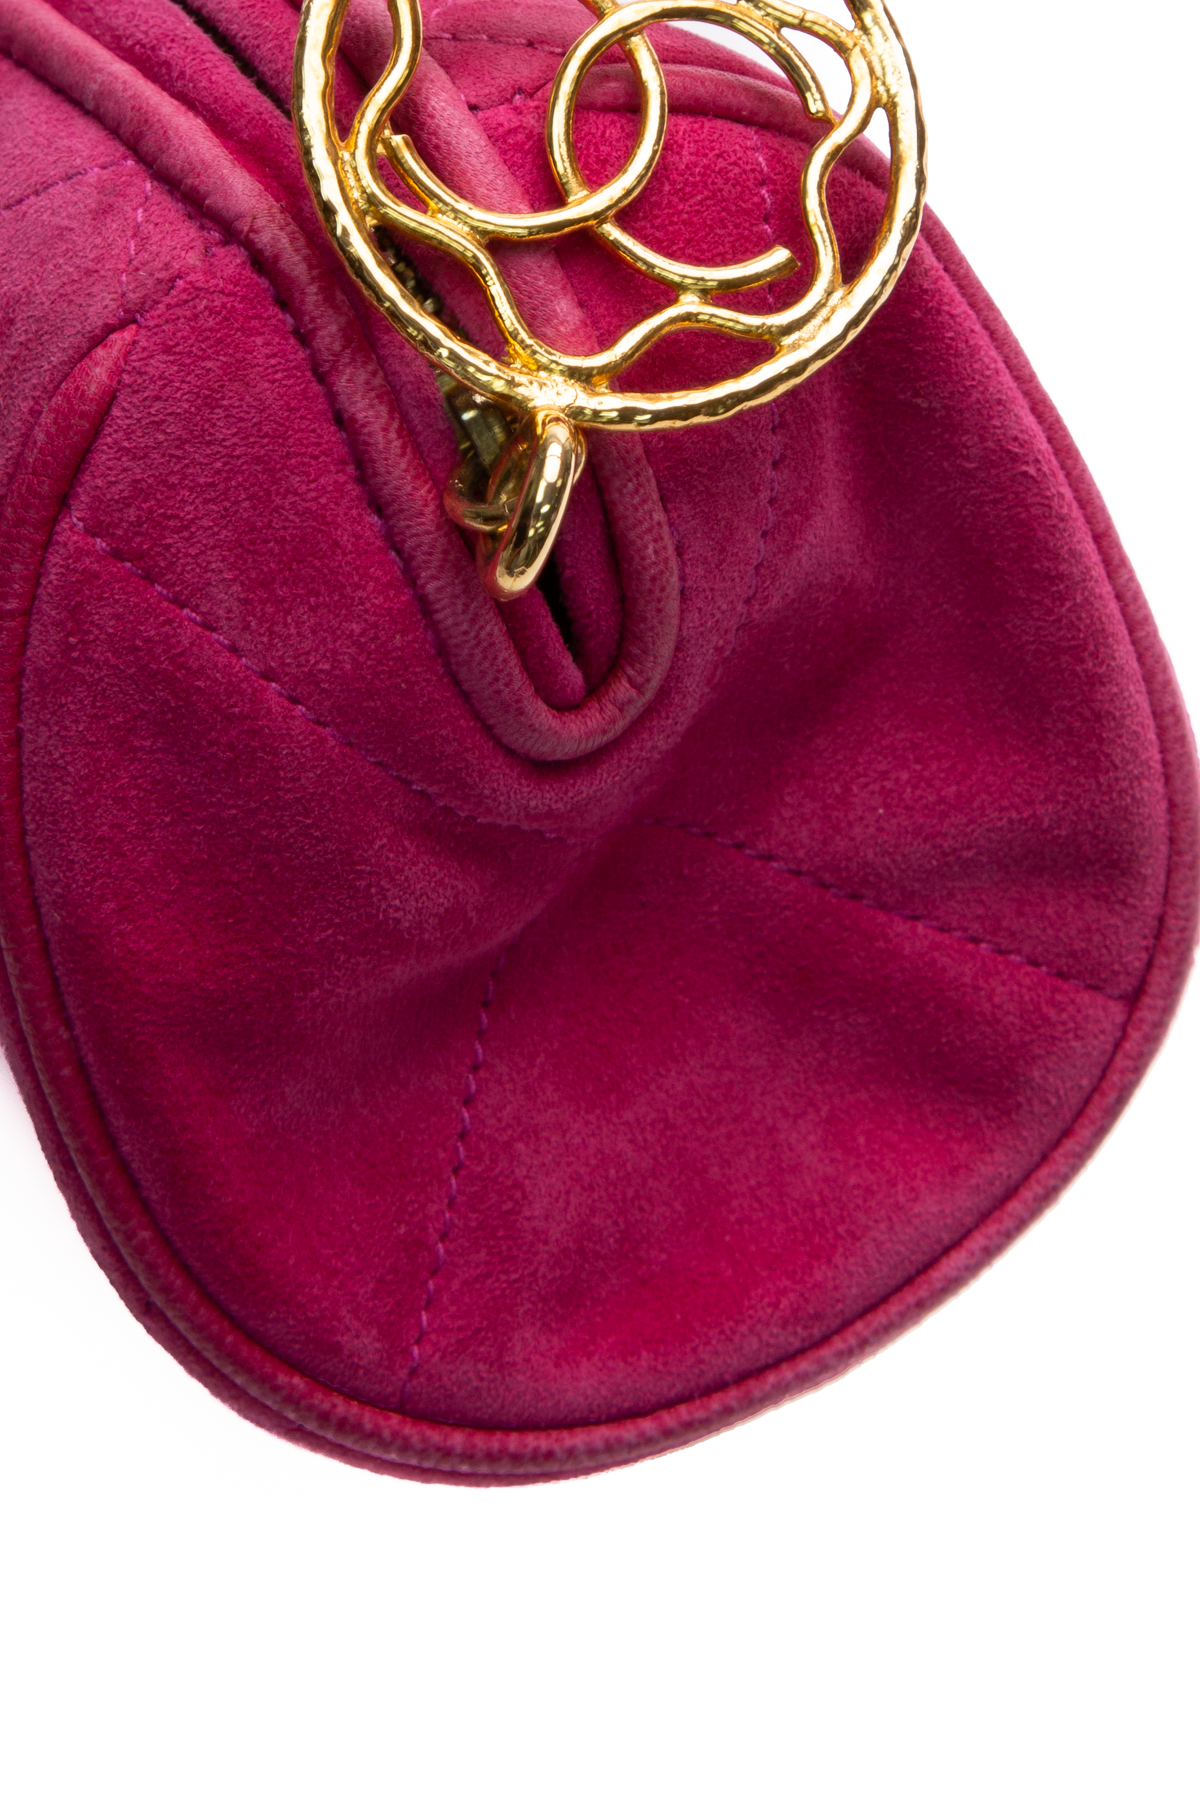 Chanel  Chanel handbags, Vintage chanel bag, Chanel handbags collection